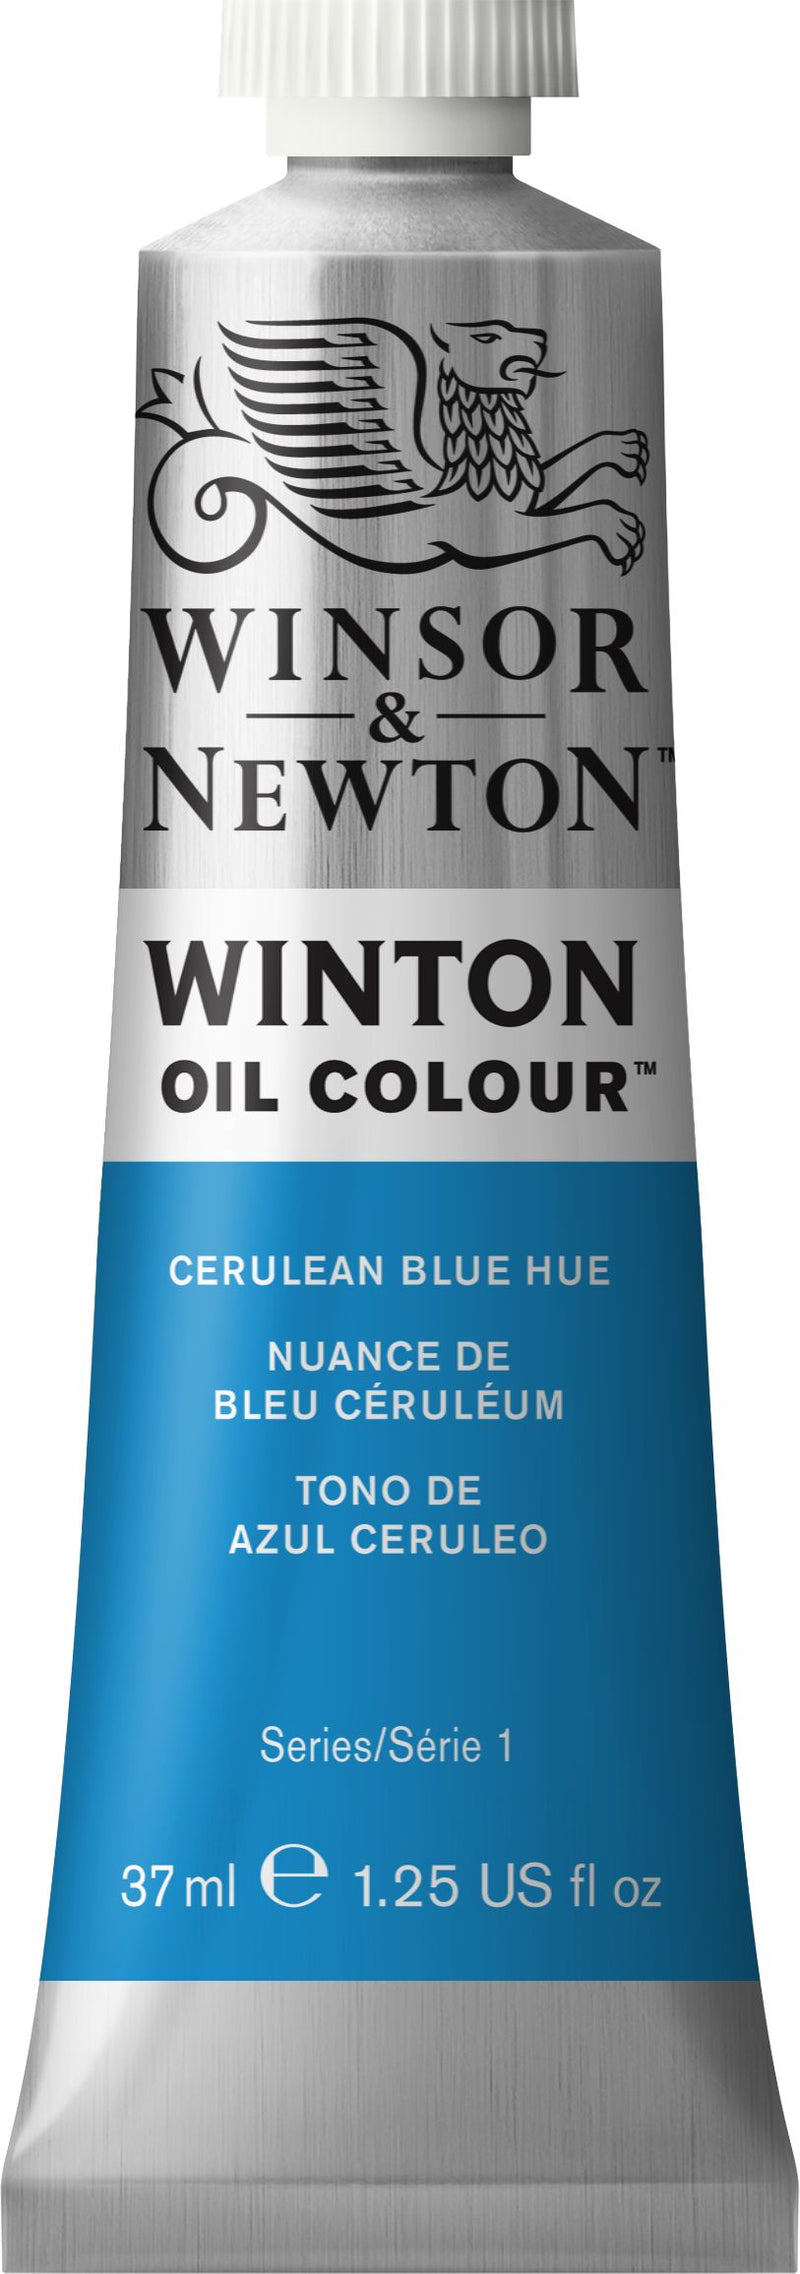 Winton Oil Colour Cerulean Blue Hue - 37ml tube